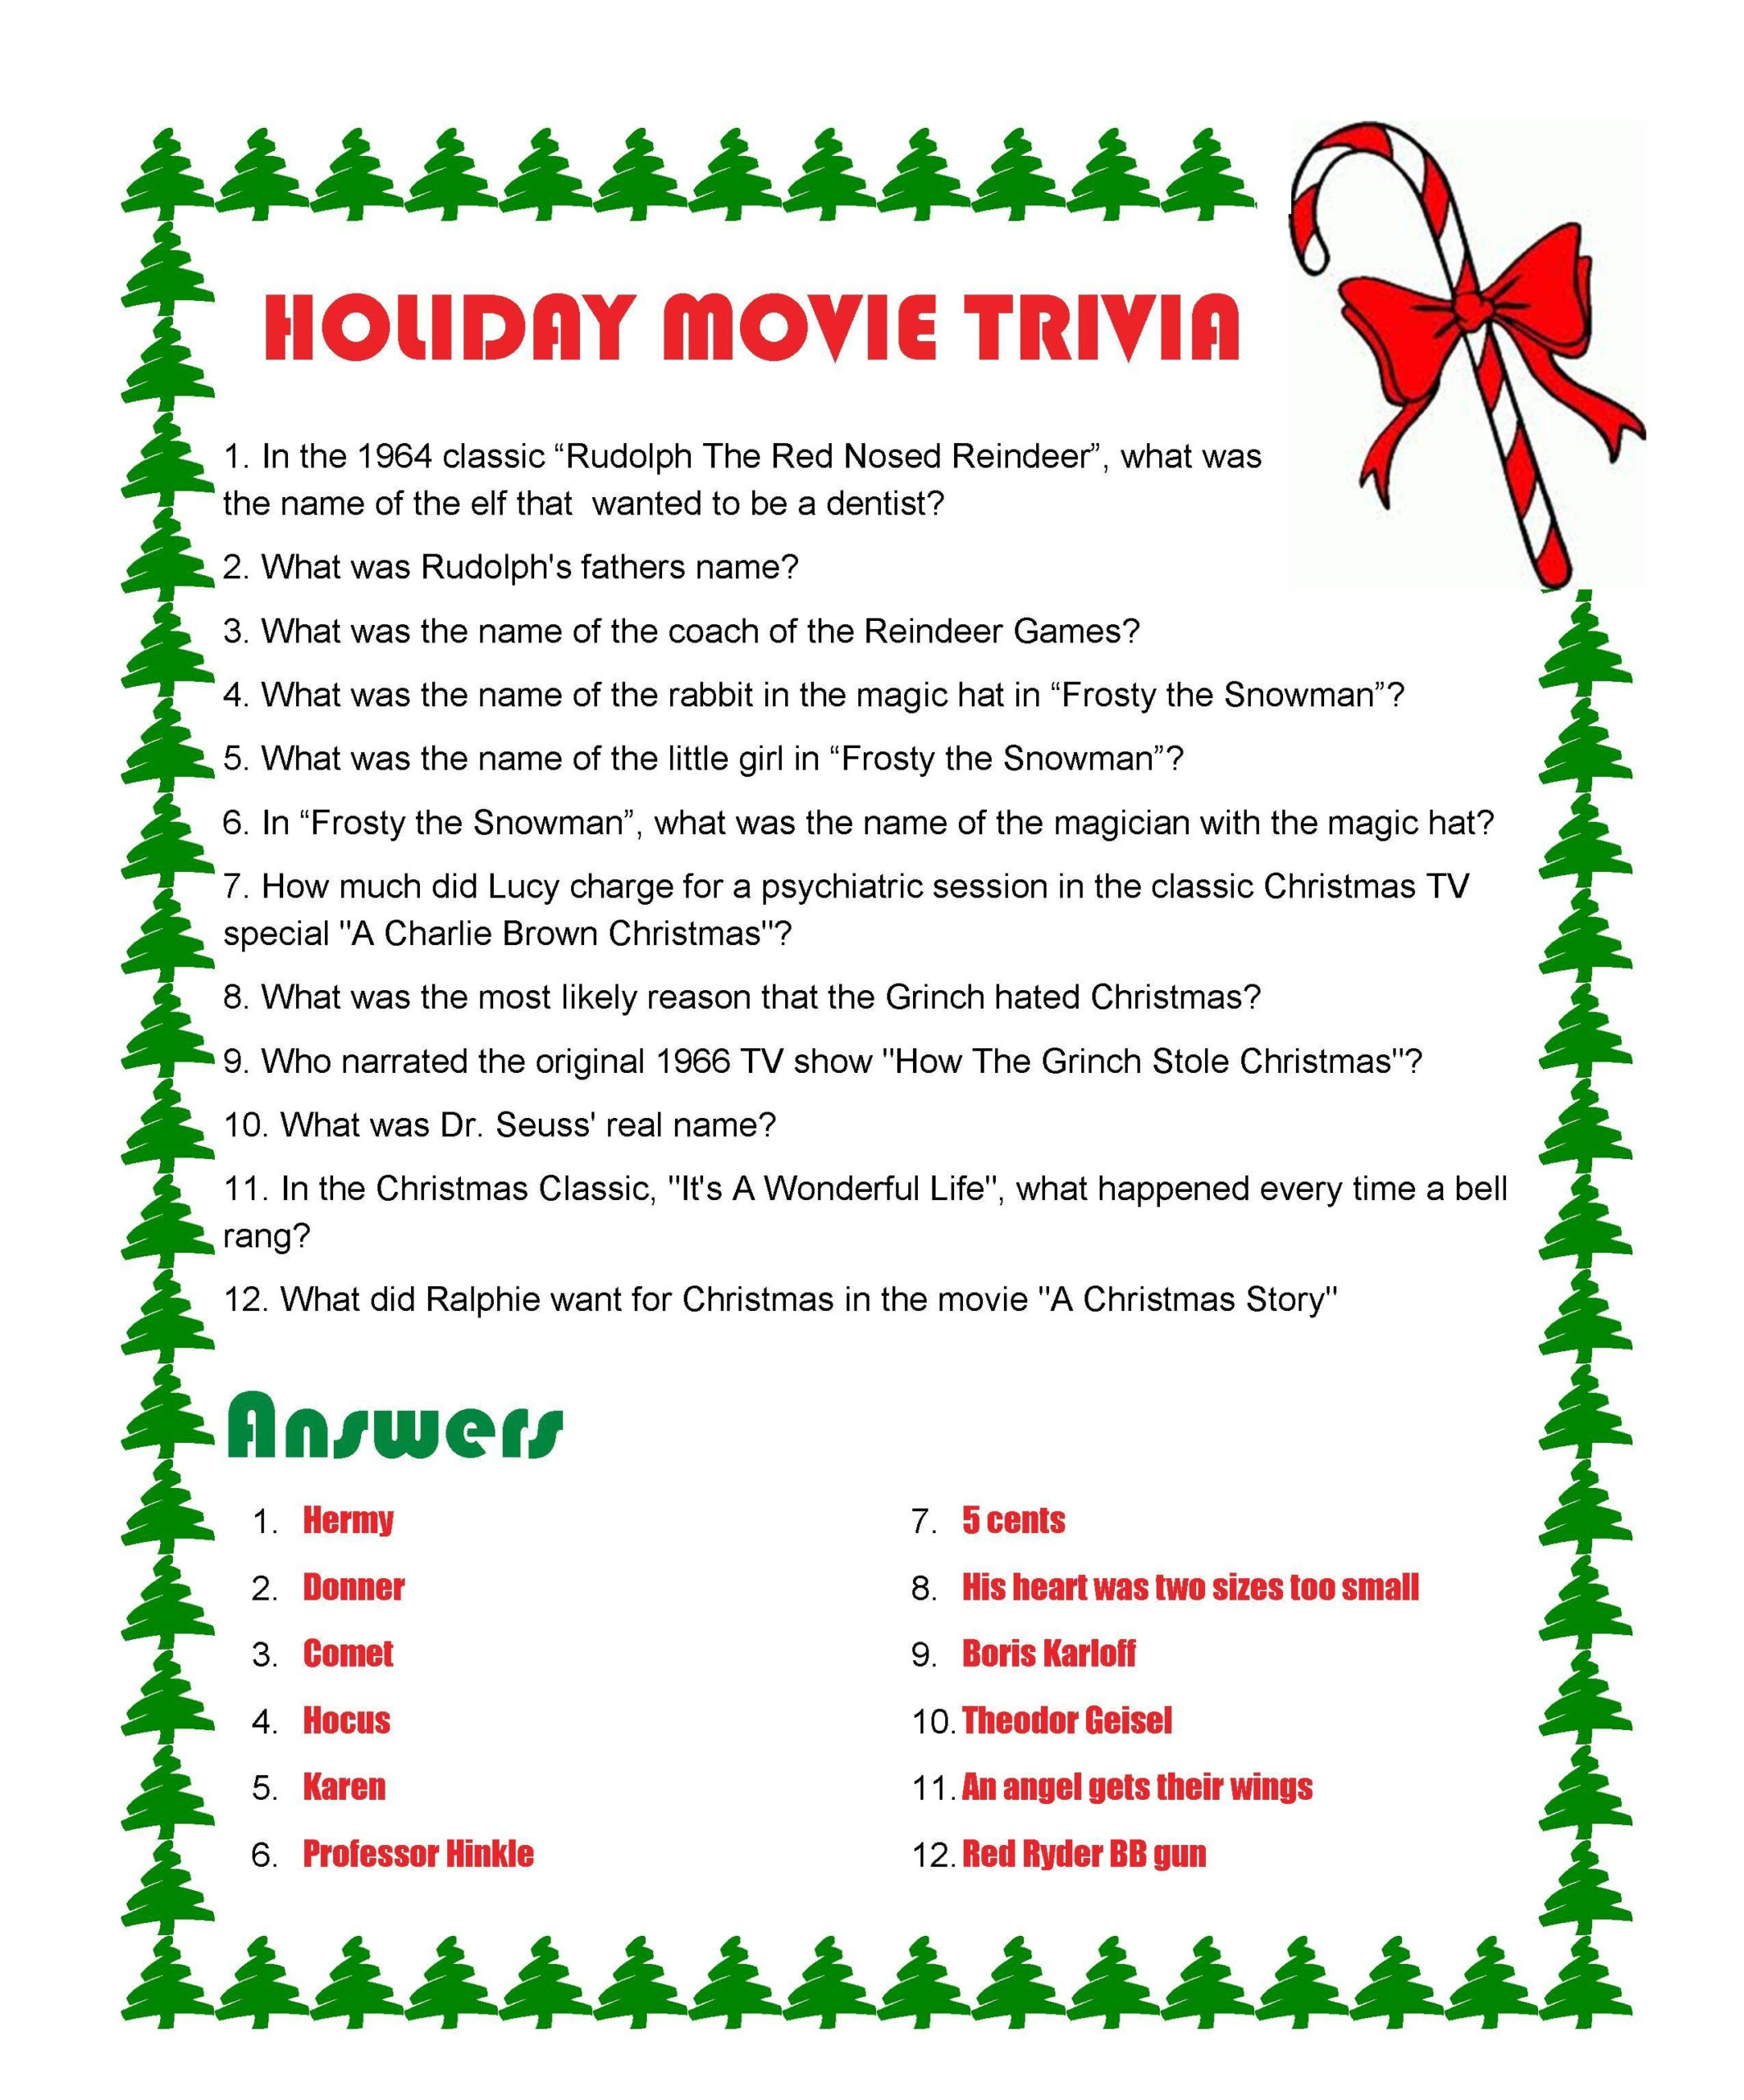 Free Printable Christmas Trivia With Answers